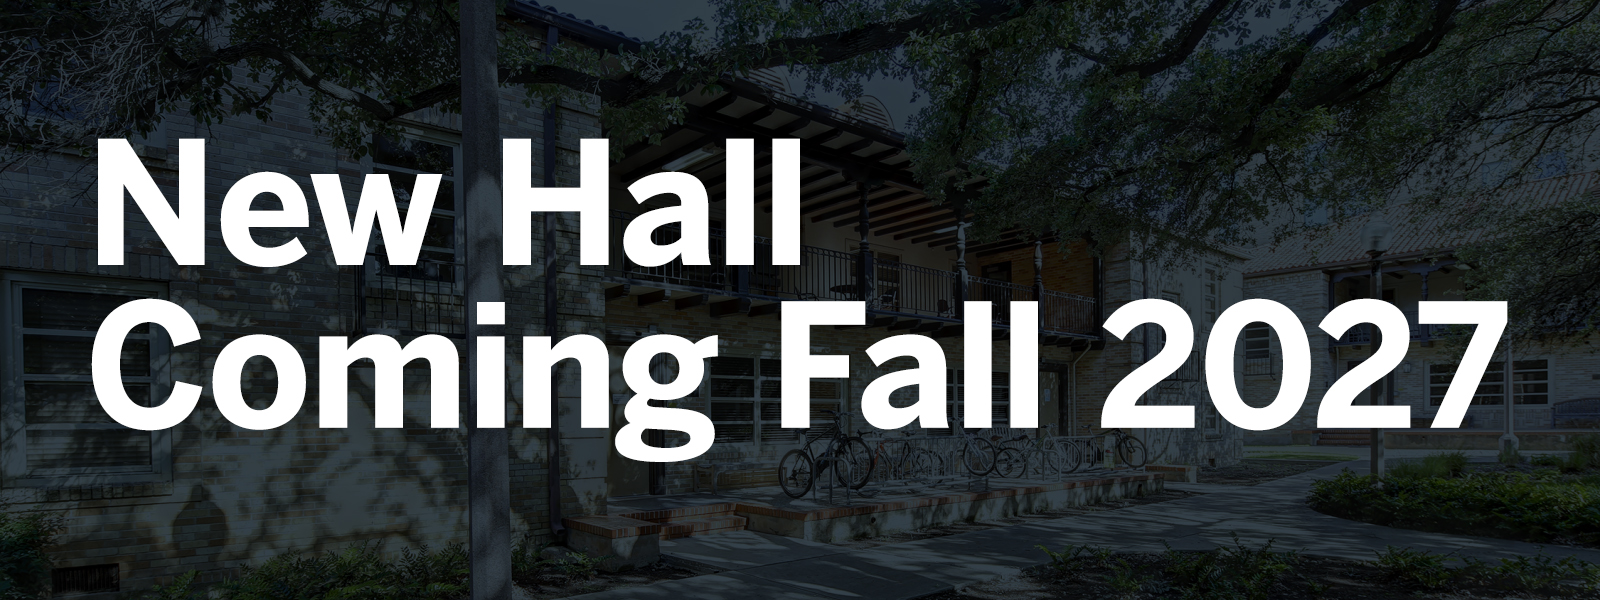 New Hall Coming Fall 2027